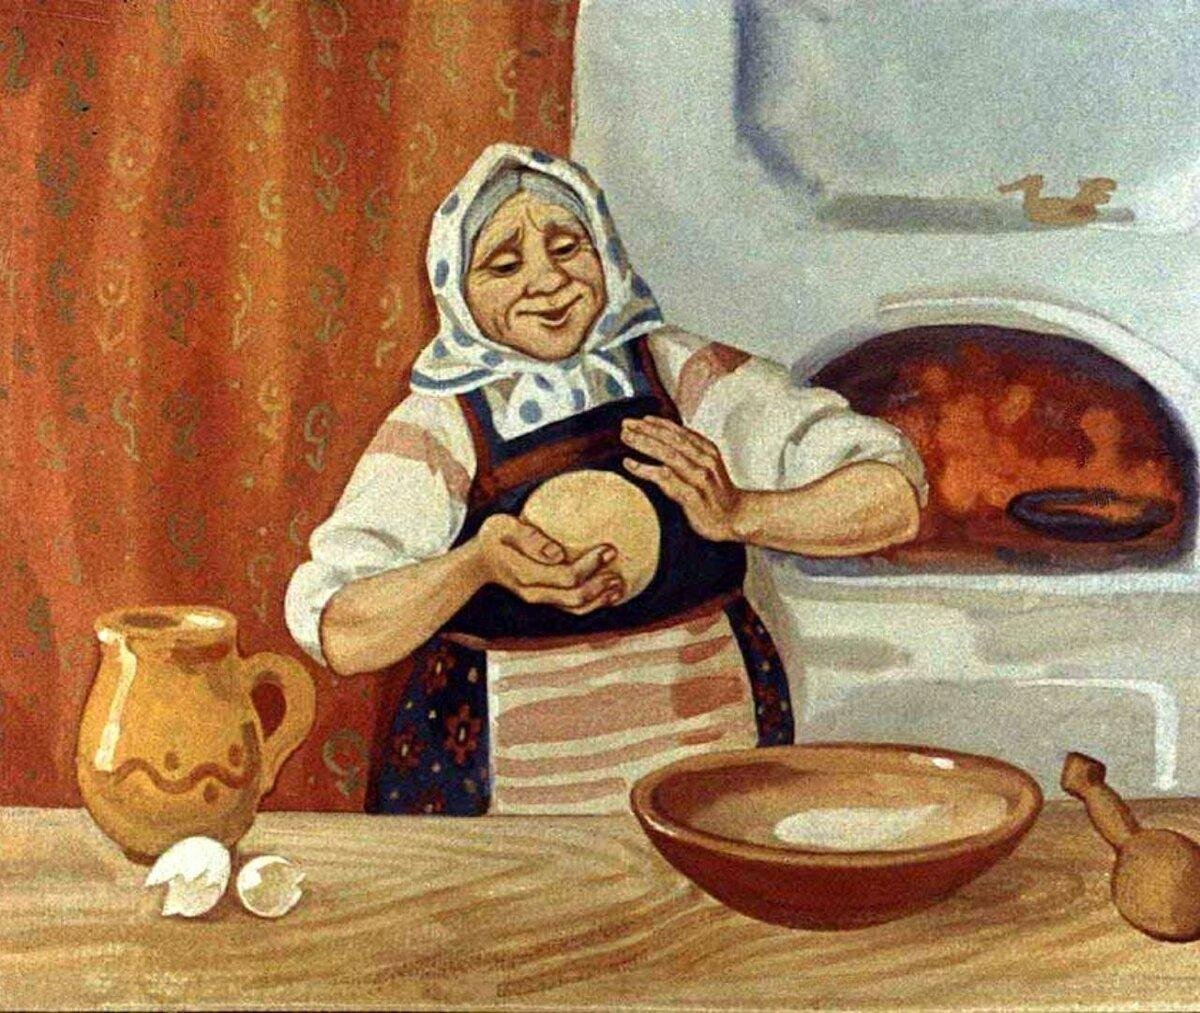 Печена бабка. Старуха печет Колобок. Бабушка месит тесто. Бабушка с пирожками. Бабка лепит колобка.